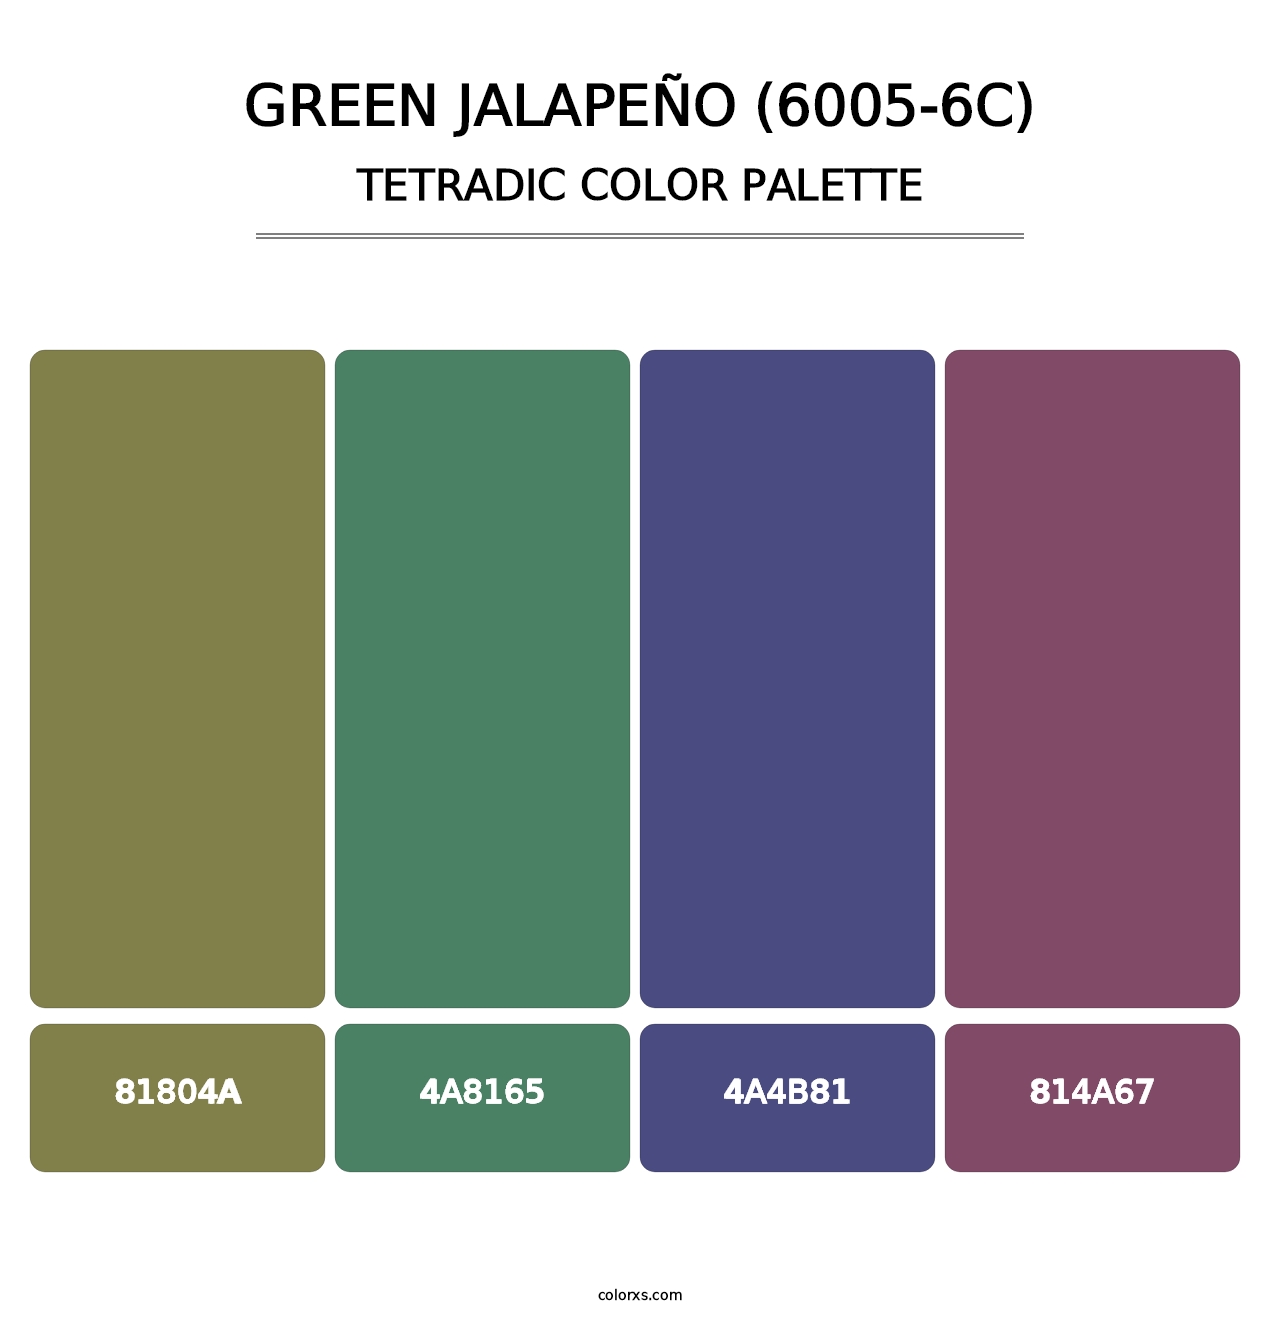 Green Jalapeño (6005-6C) - Tetradic Color Palette